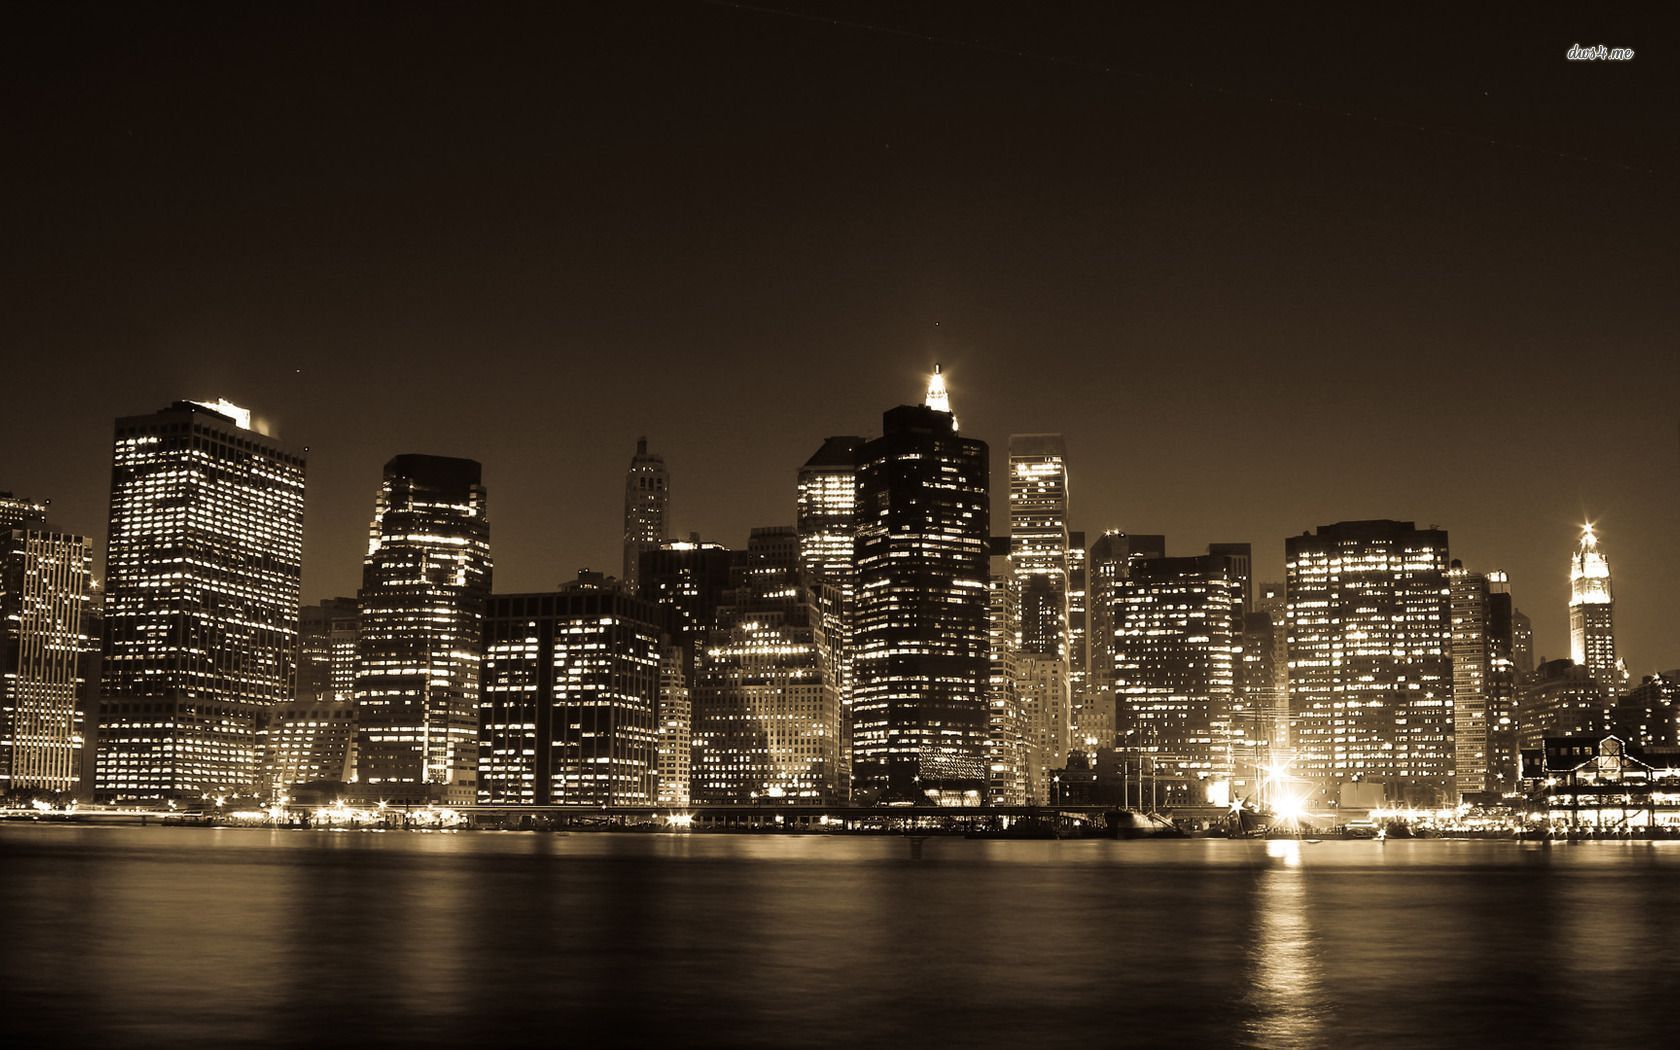 New York City Lights wallpaper - World wallpapers - #4980